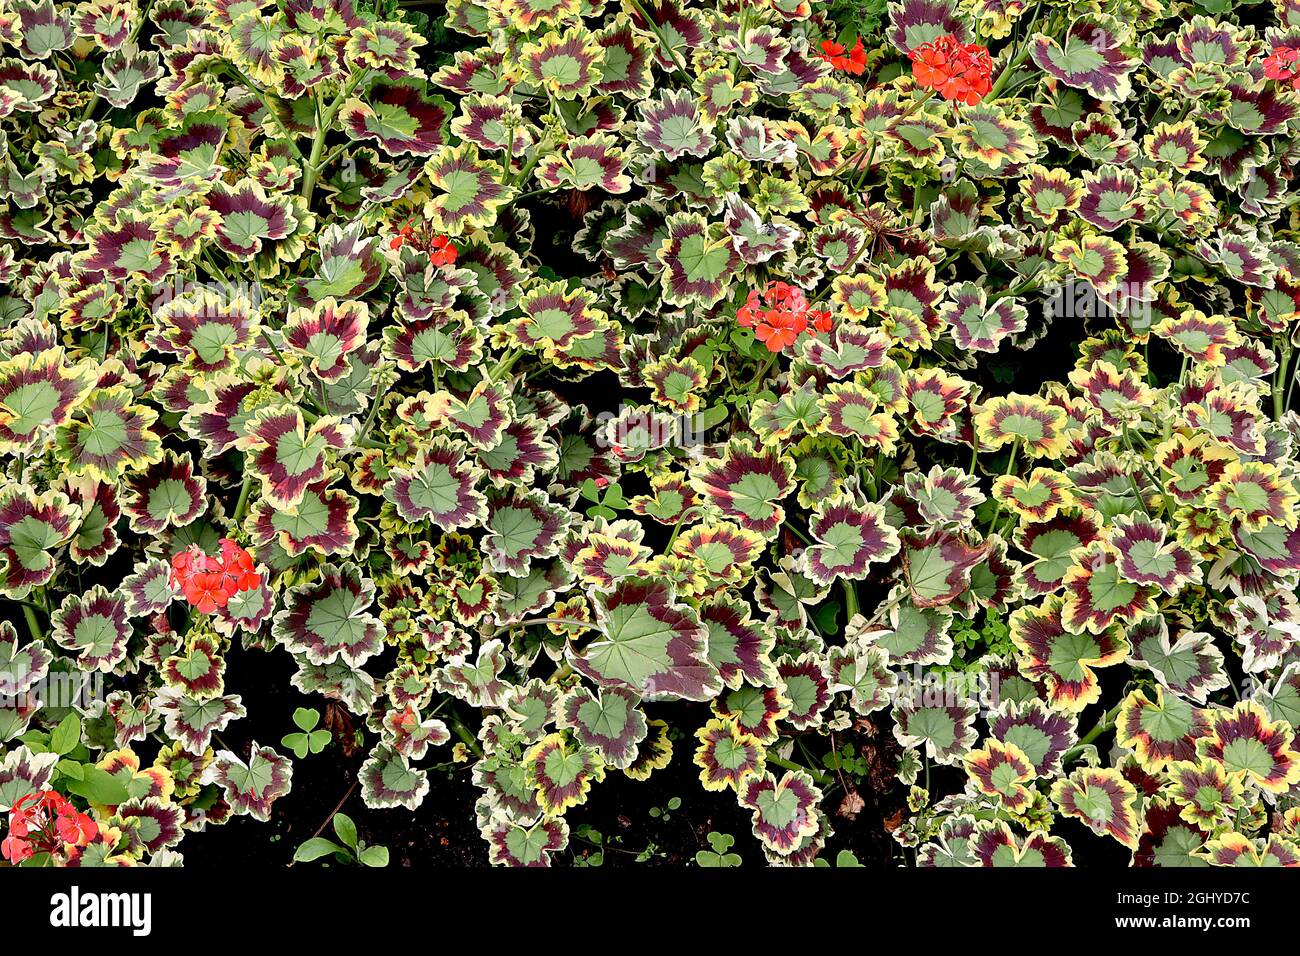 Pelargonium ‘Mrs Pollock’ zonal geranium Mrs Pollock – red flowers and tricolor leaves,  August, England, UK Stock Photo